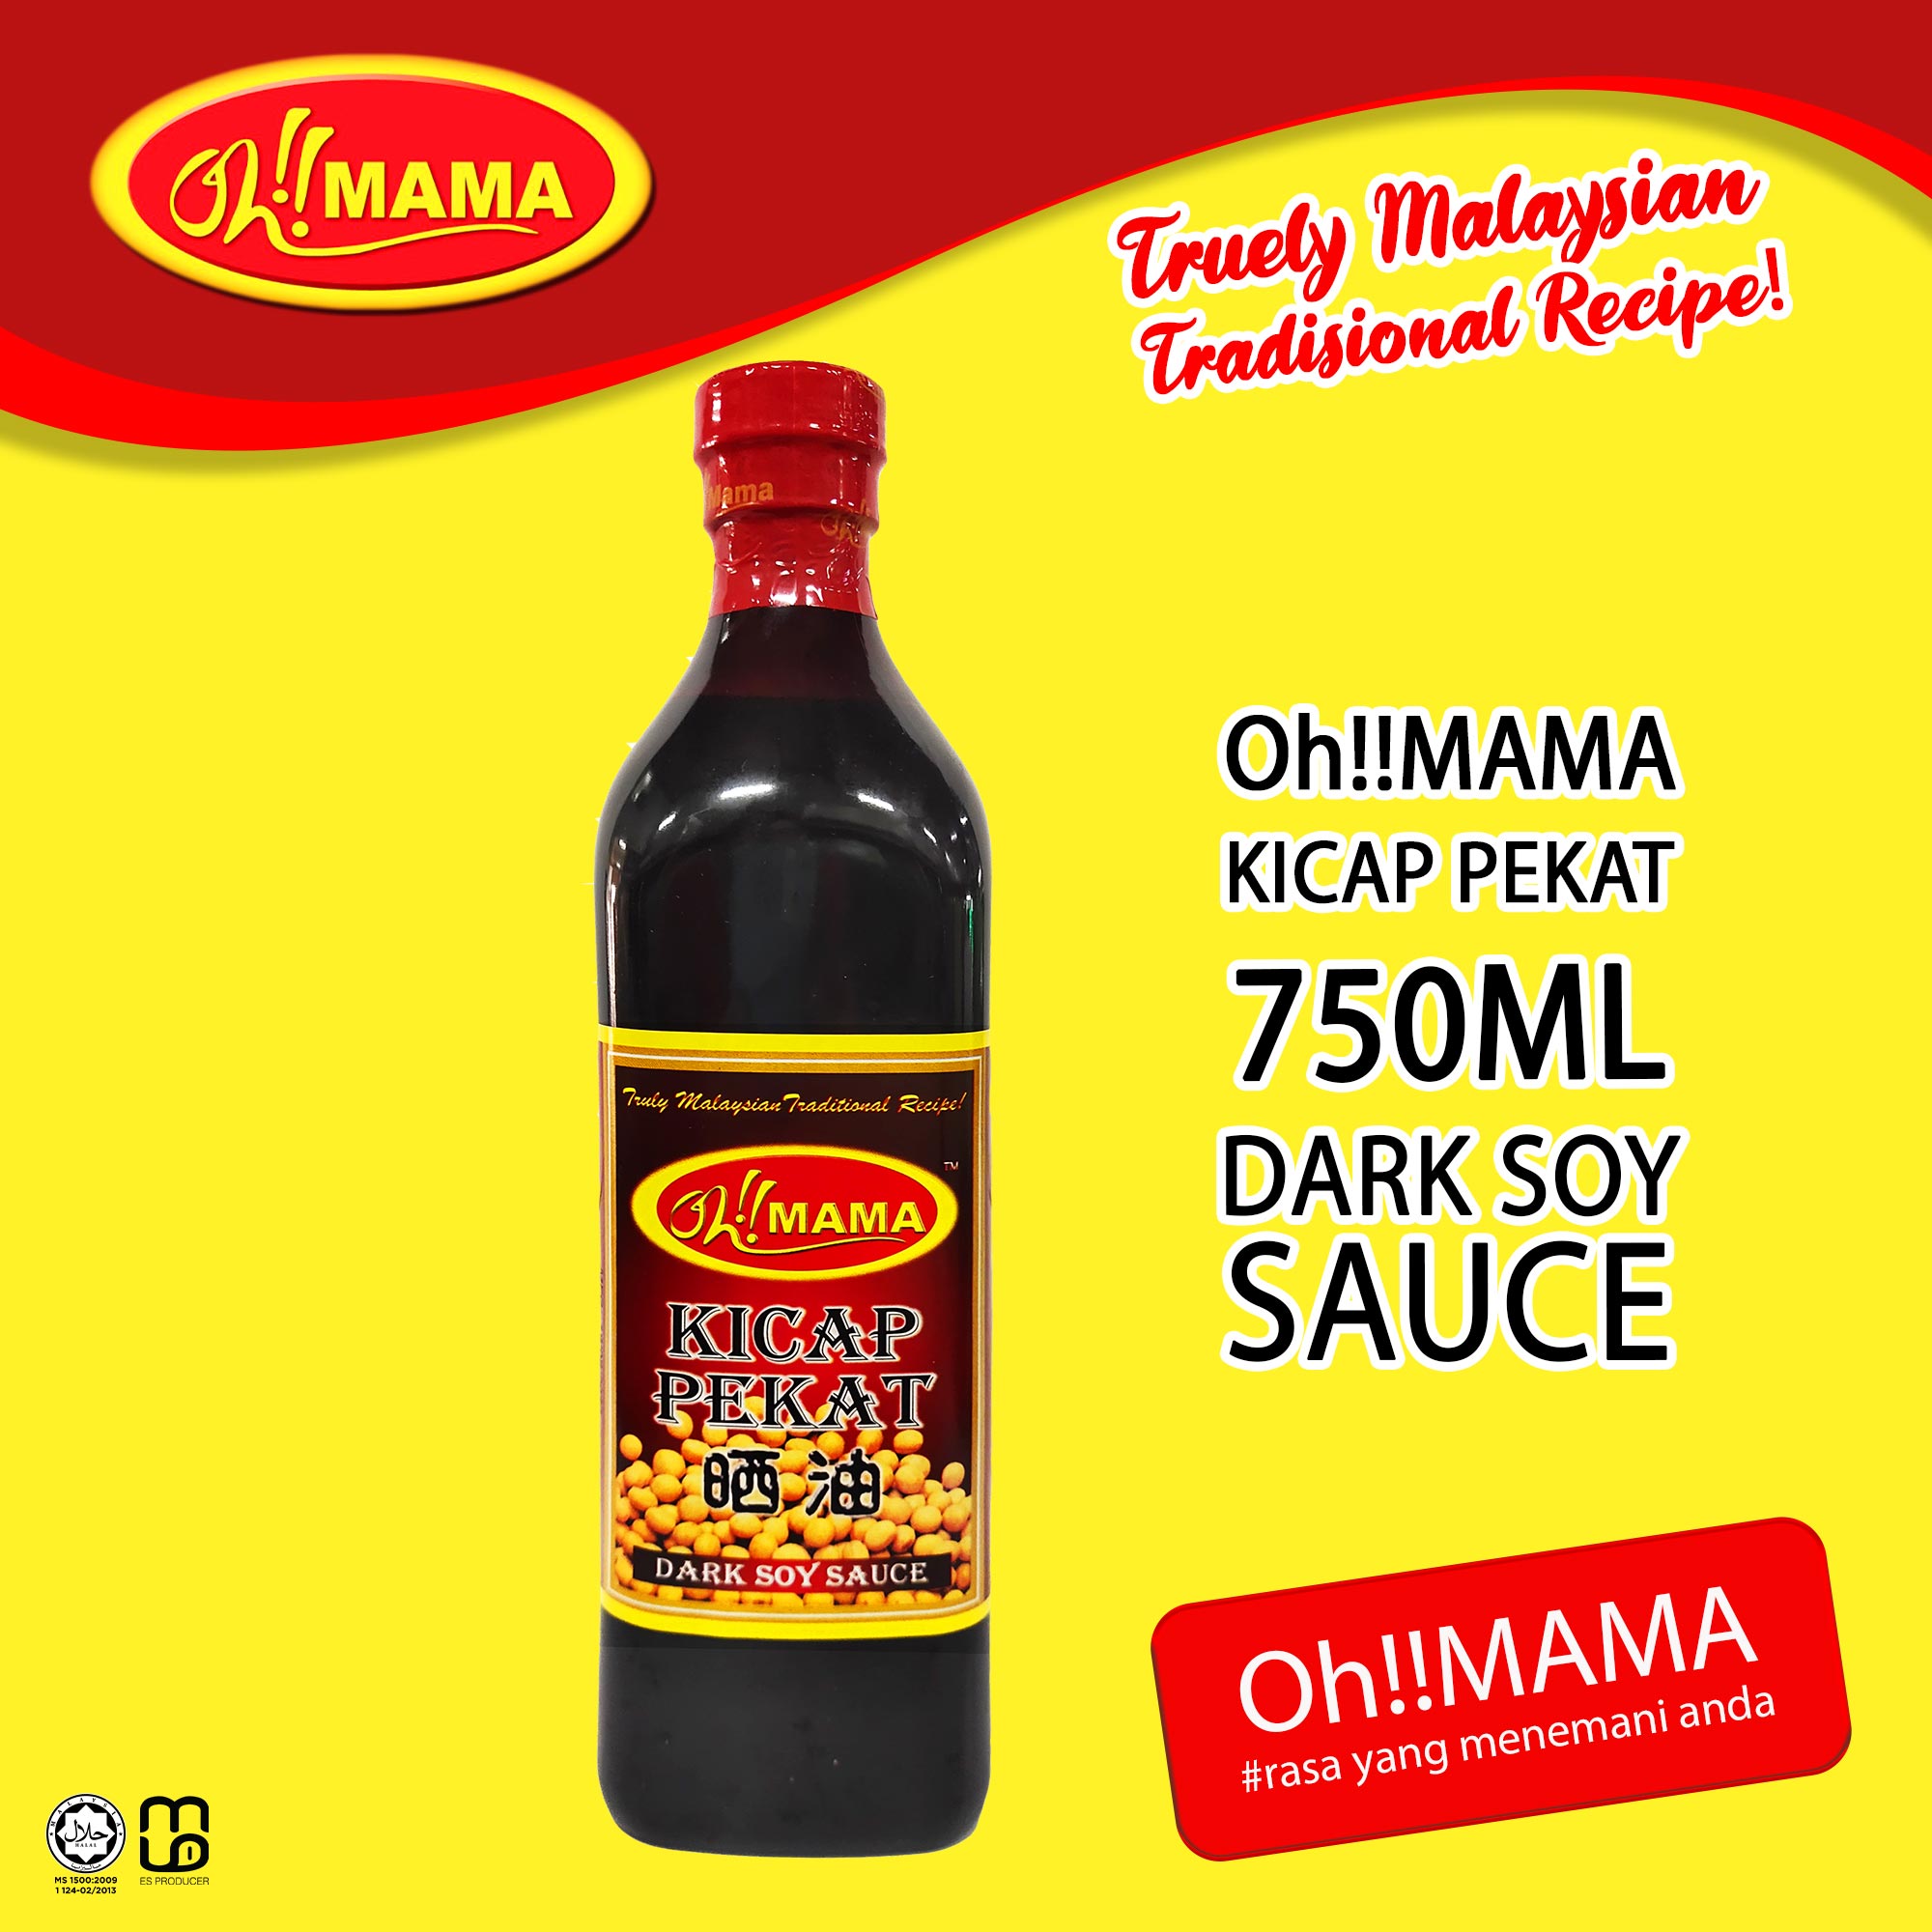 Oh!!MAMA Dark Soy Sauce / Kicap Pekat 750ml